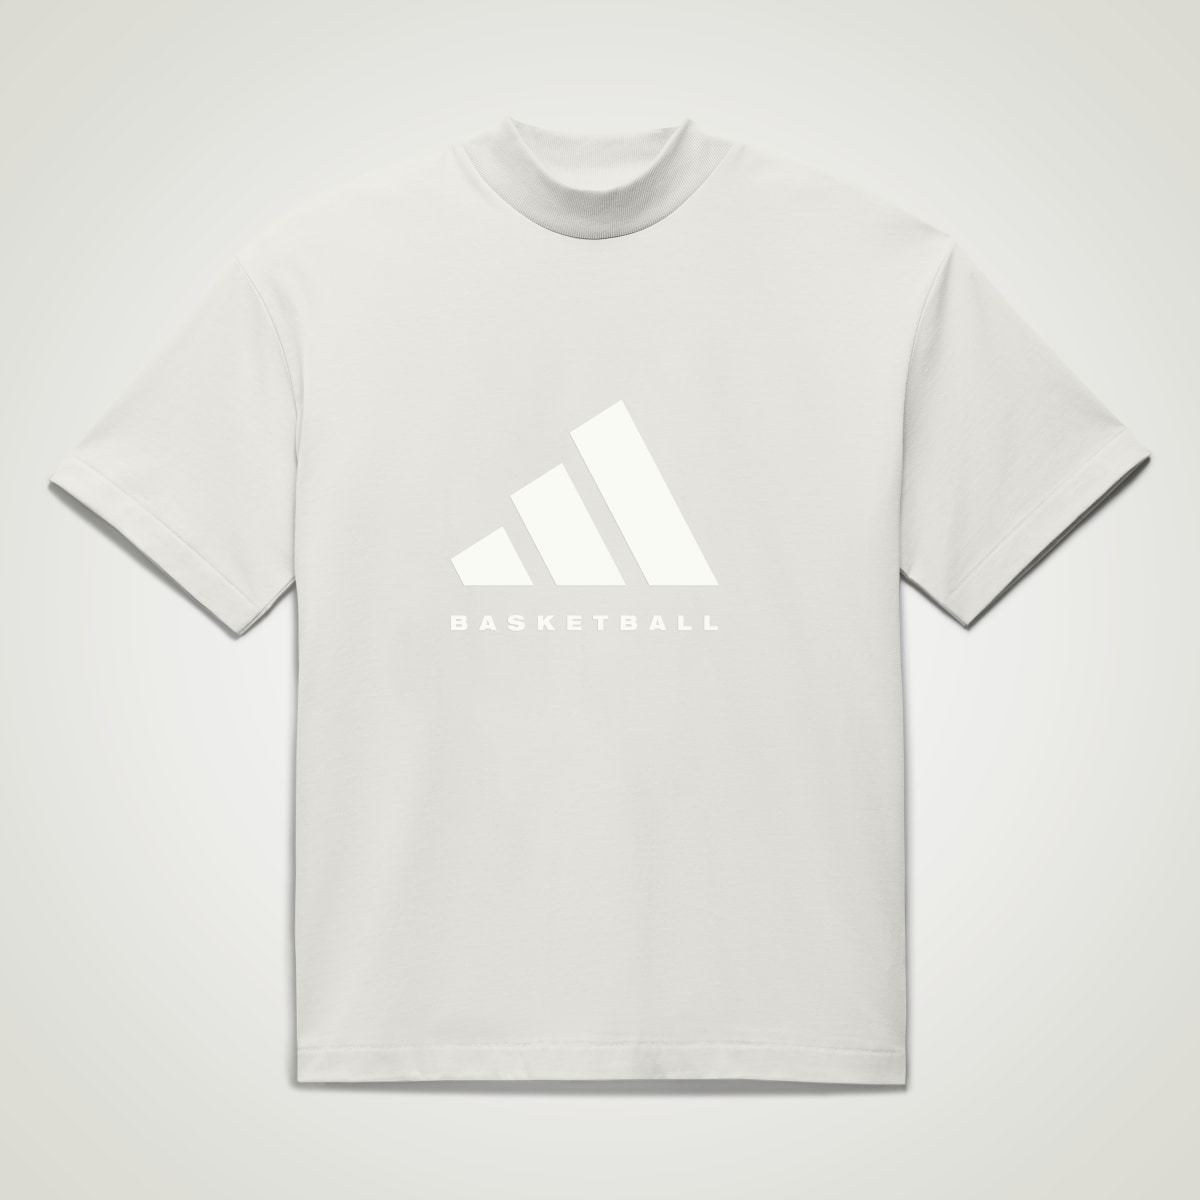 Adidas Basketball T-Shirt. 4